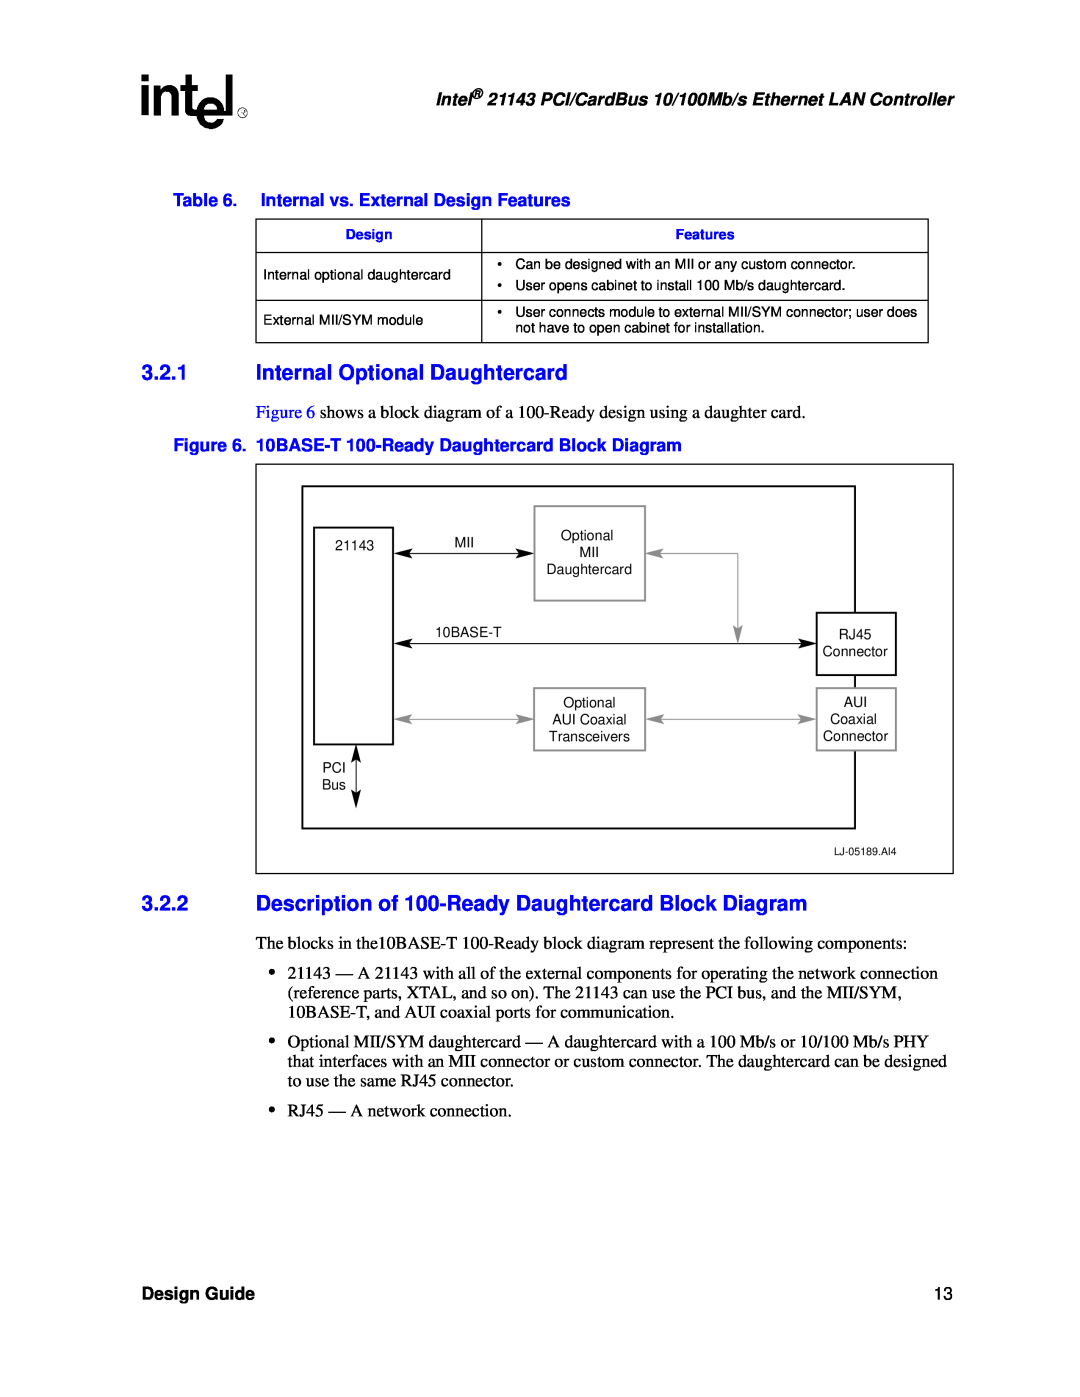 Intel 21143 manual Internal Optional Daughtercard, Description of 100-Ready Daughtercard Block Diagram, Design Guide 